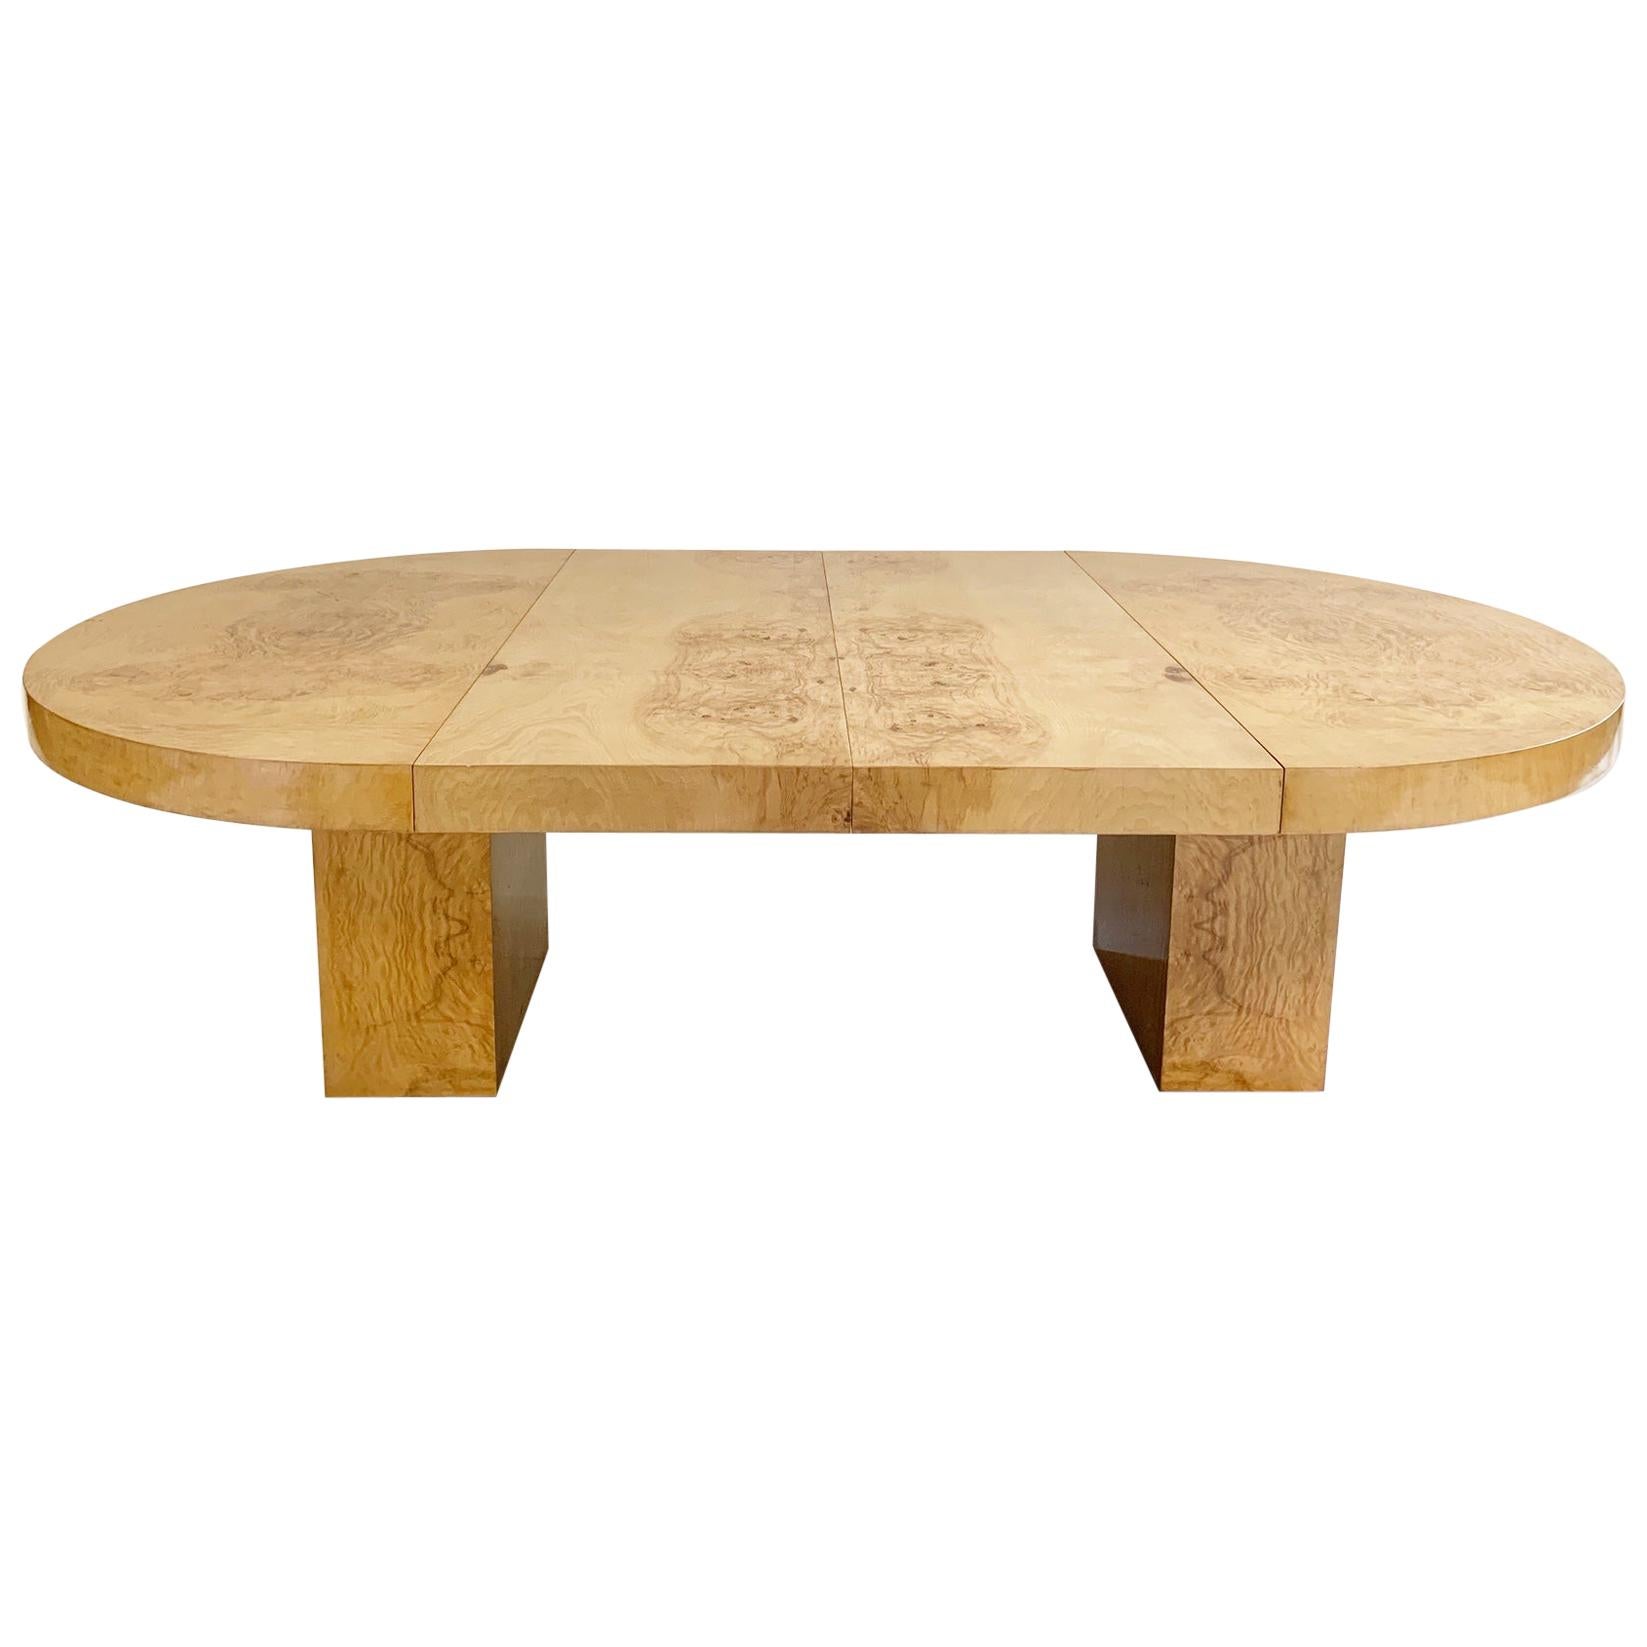 Leon Rosen Burl Wood Oval Dining Table